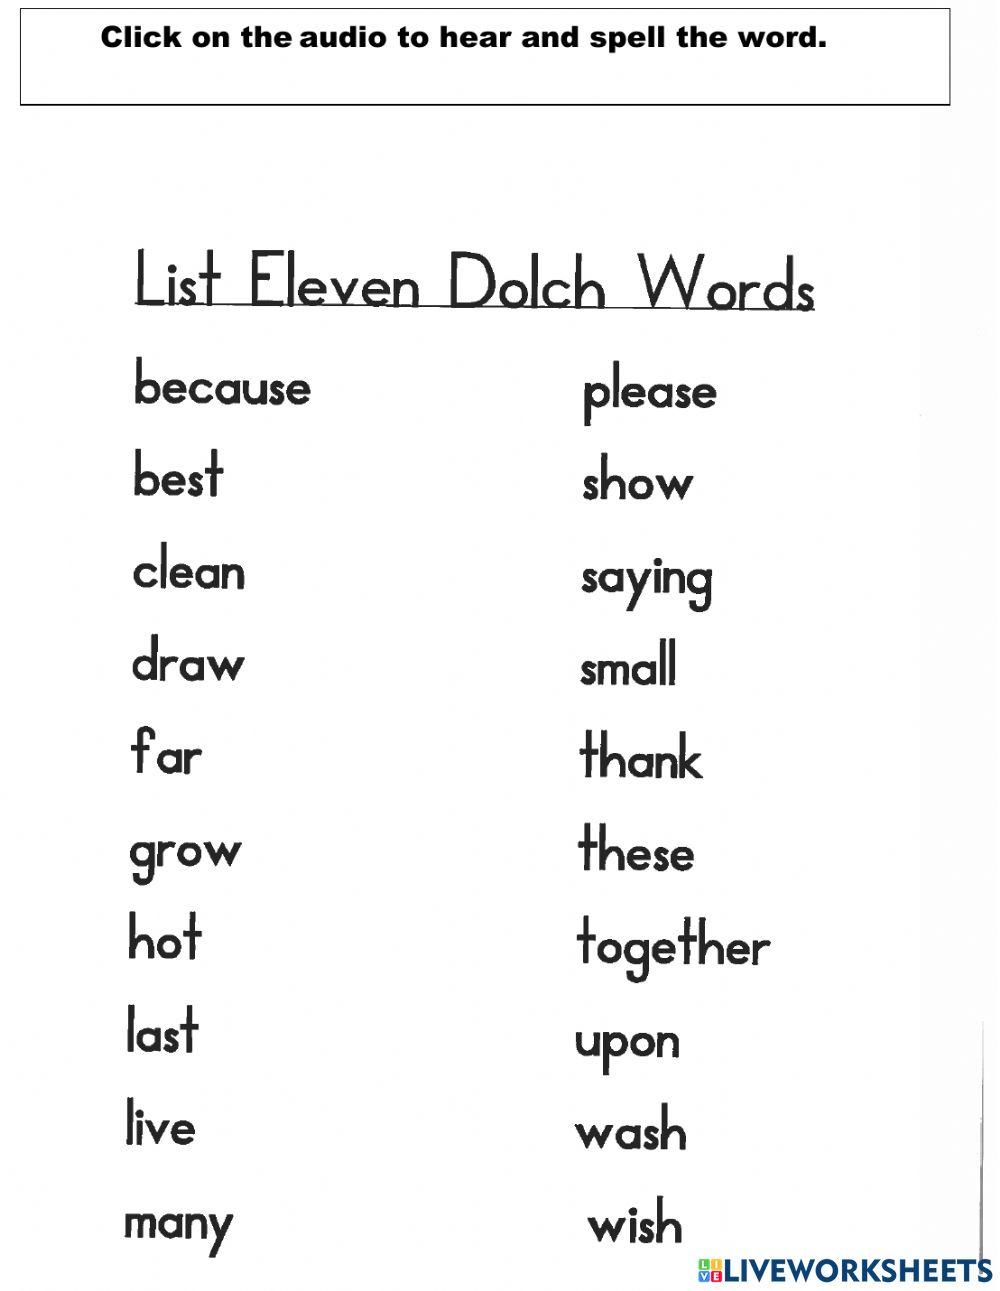 Spelling list